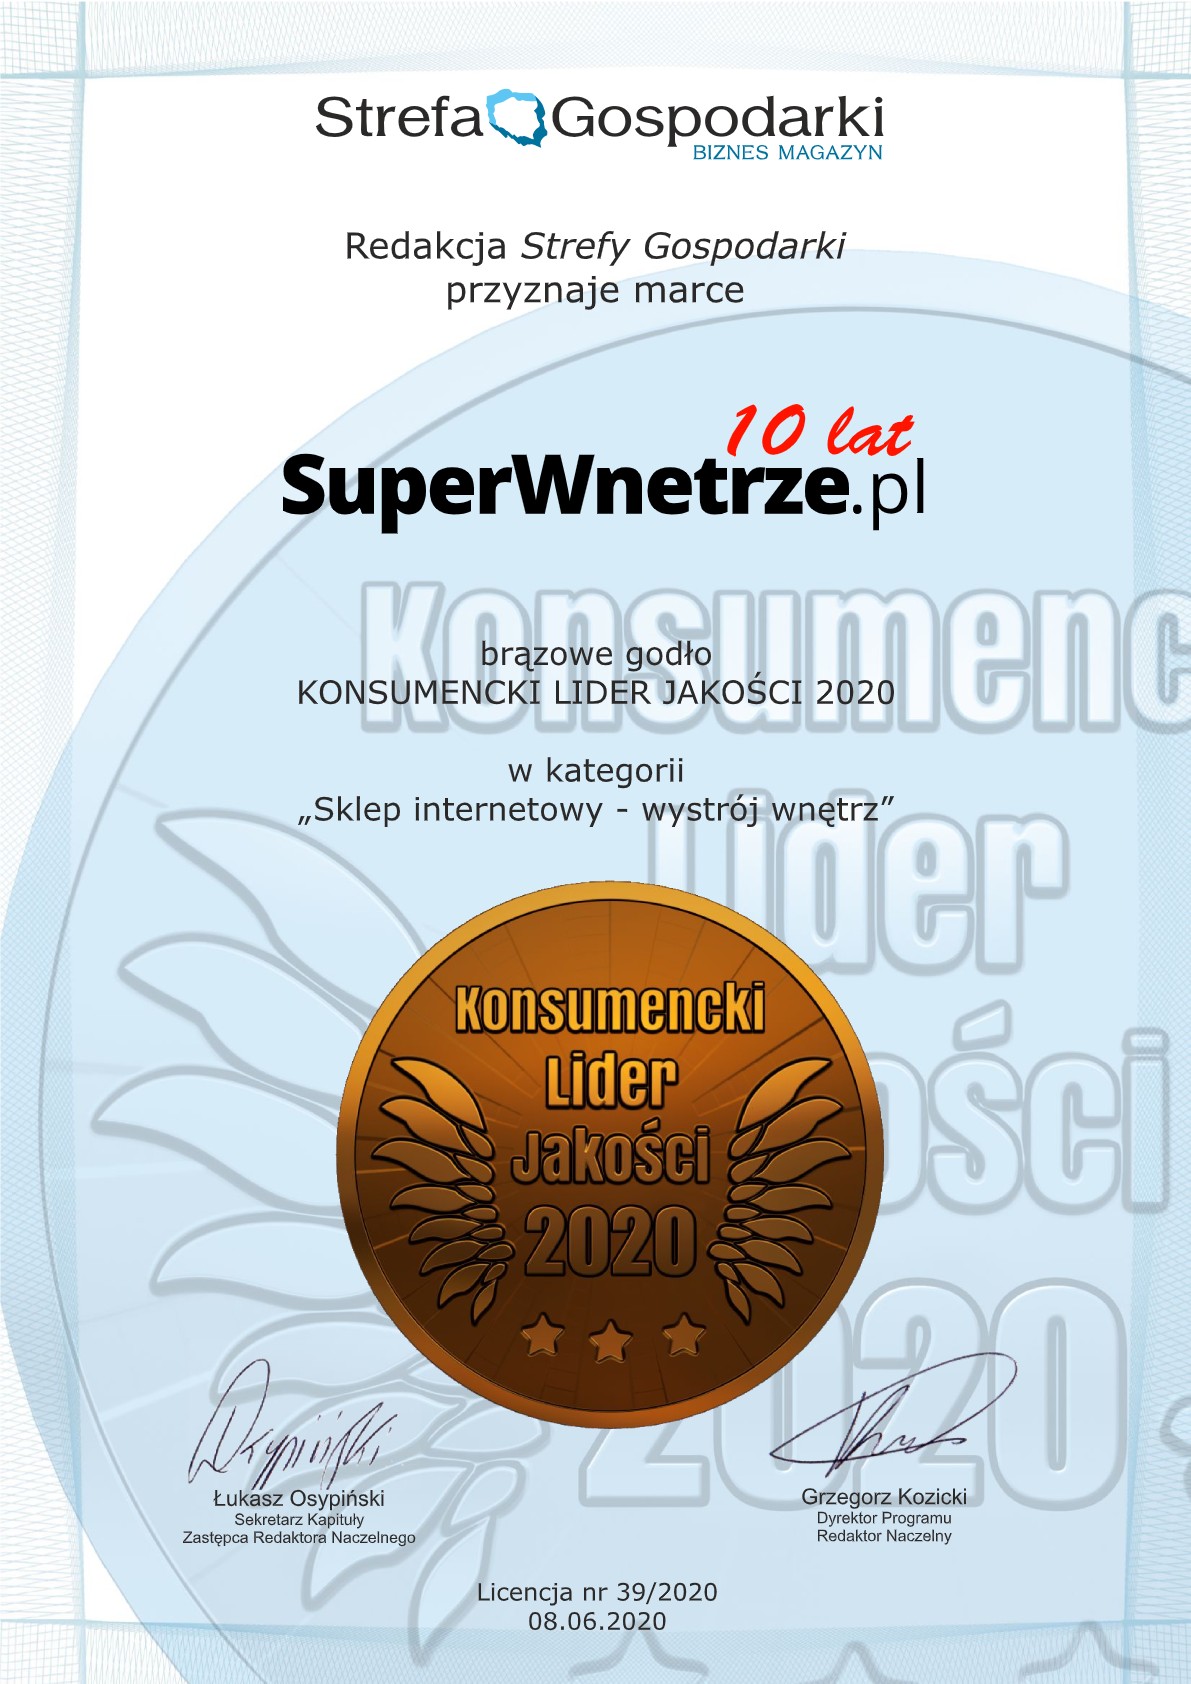 SuperWnetrze.pl Konsumenckim liderem jakości 2020